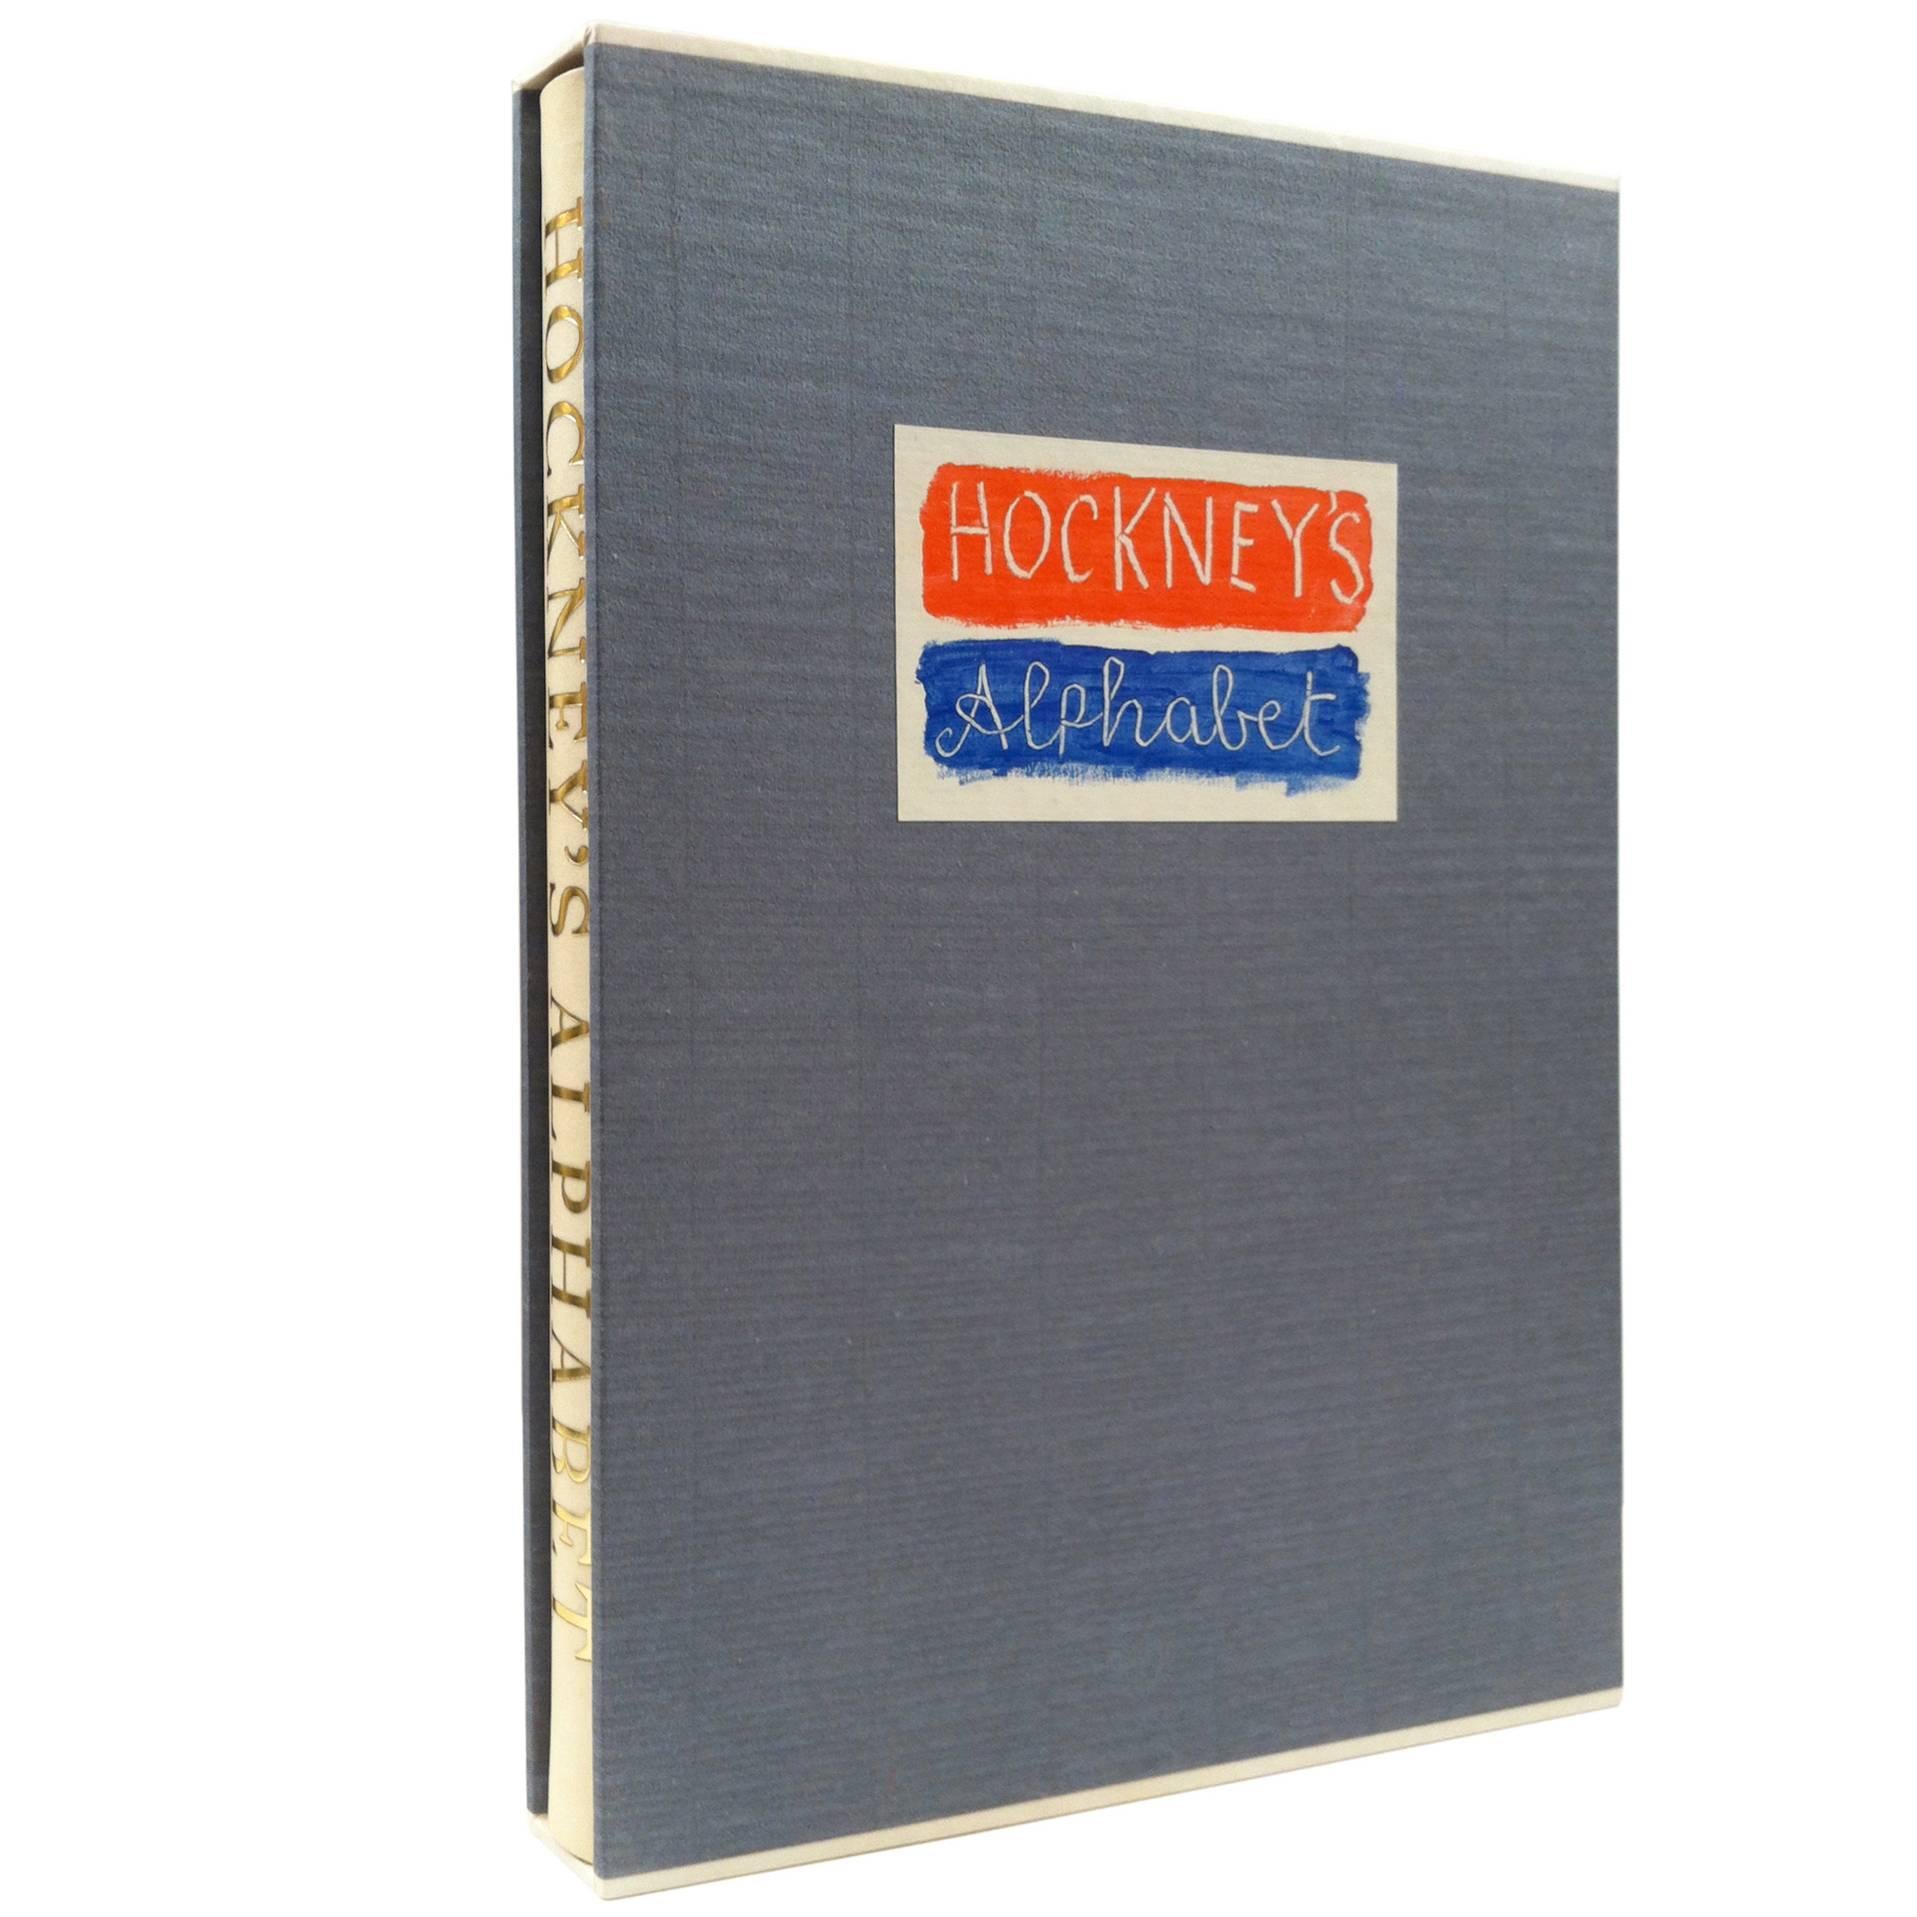 Hockney's Alphabet by David Hockney, Signed Limited Edition For Sale